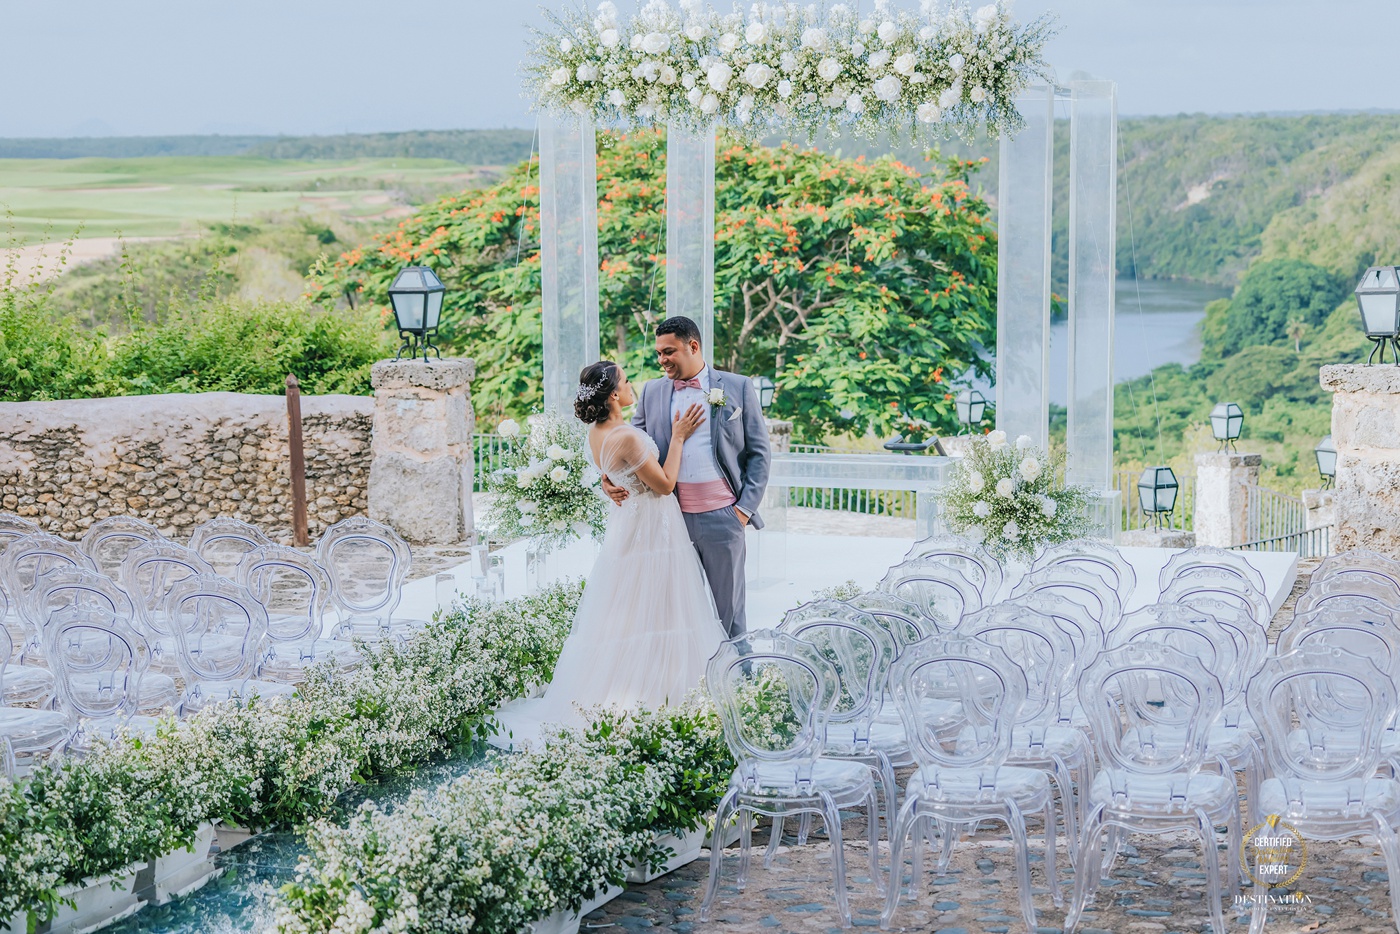 Casa de Campo Ultimate Promise - Multi-day destination wedding package